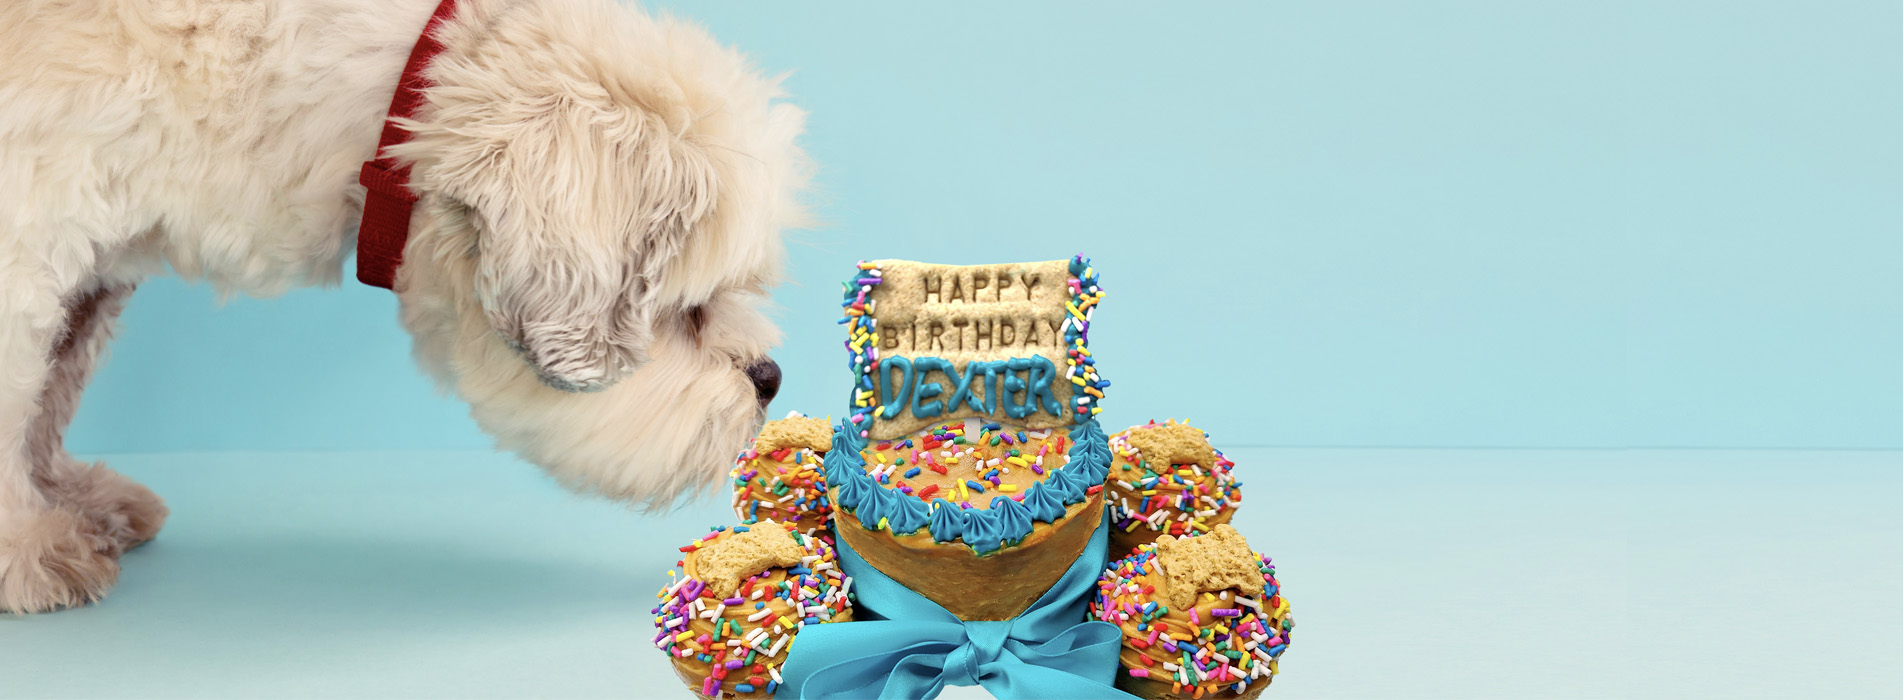 custom dog birthday cakes at pawsitively sweet bakery